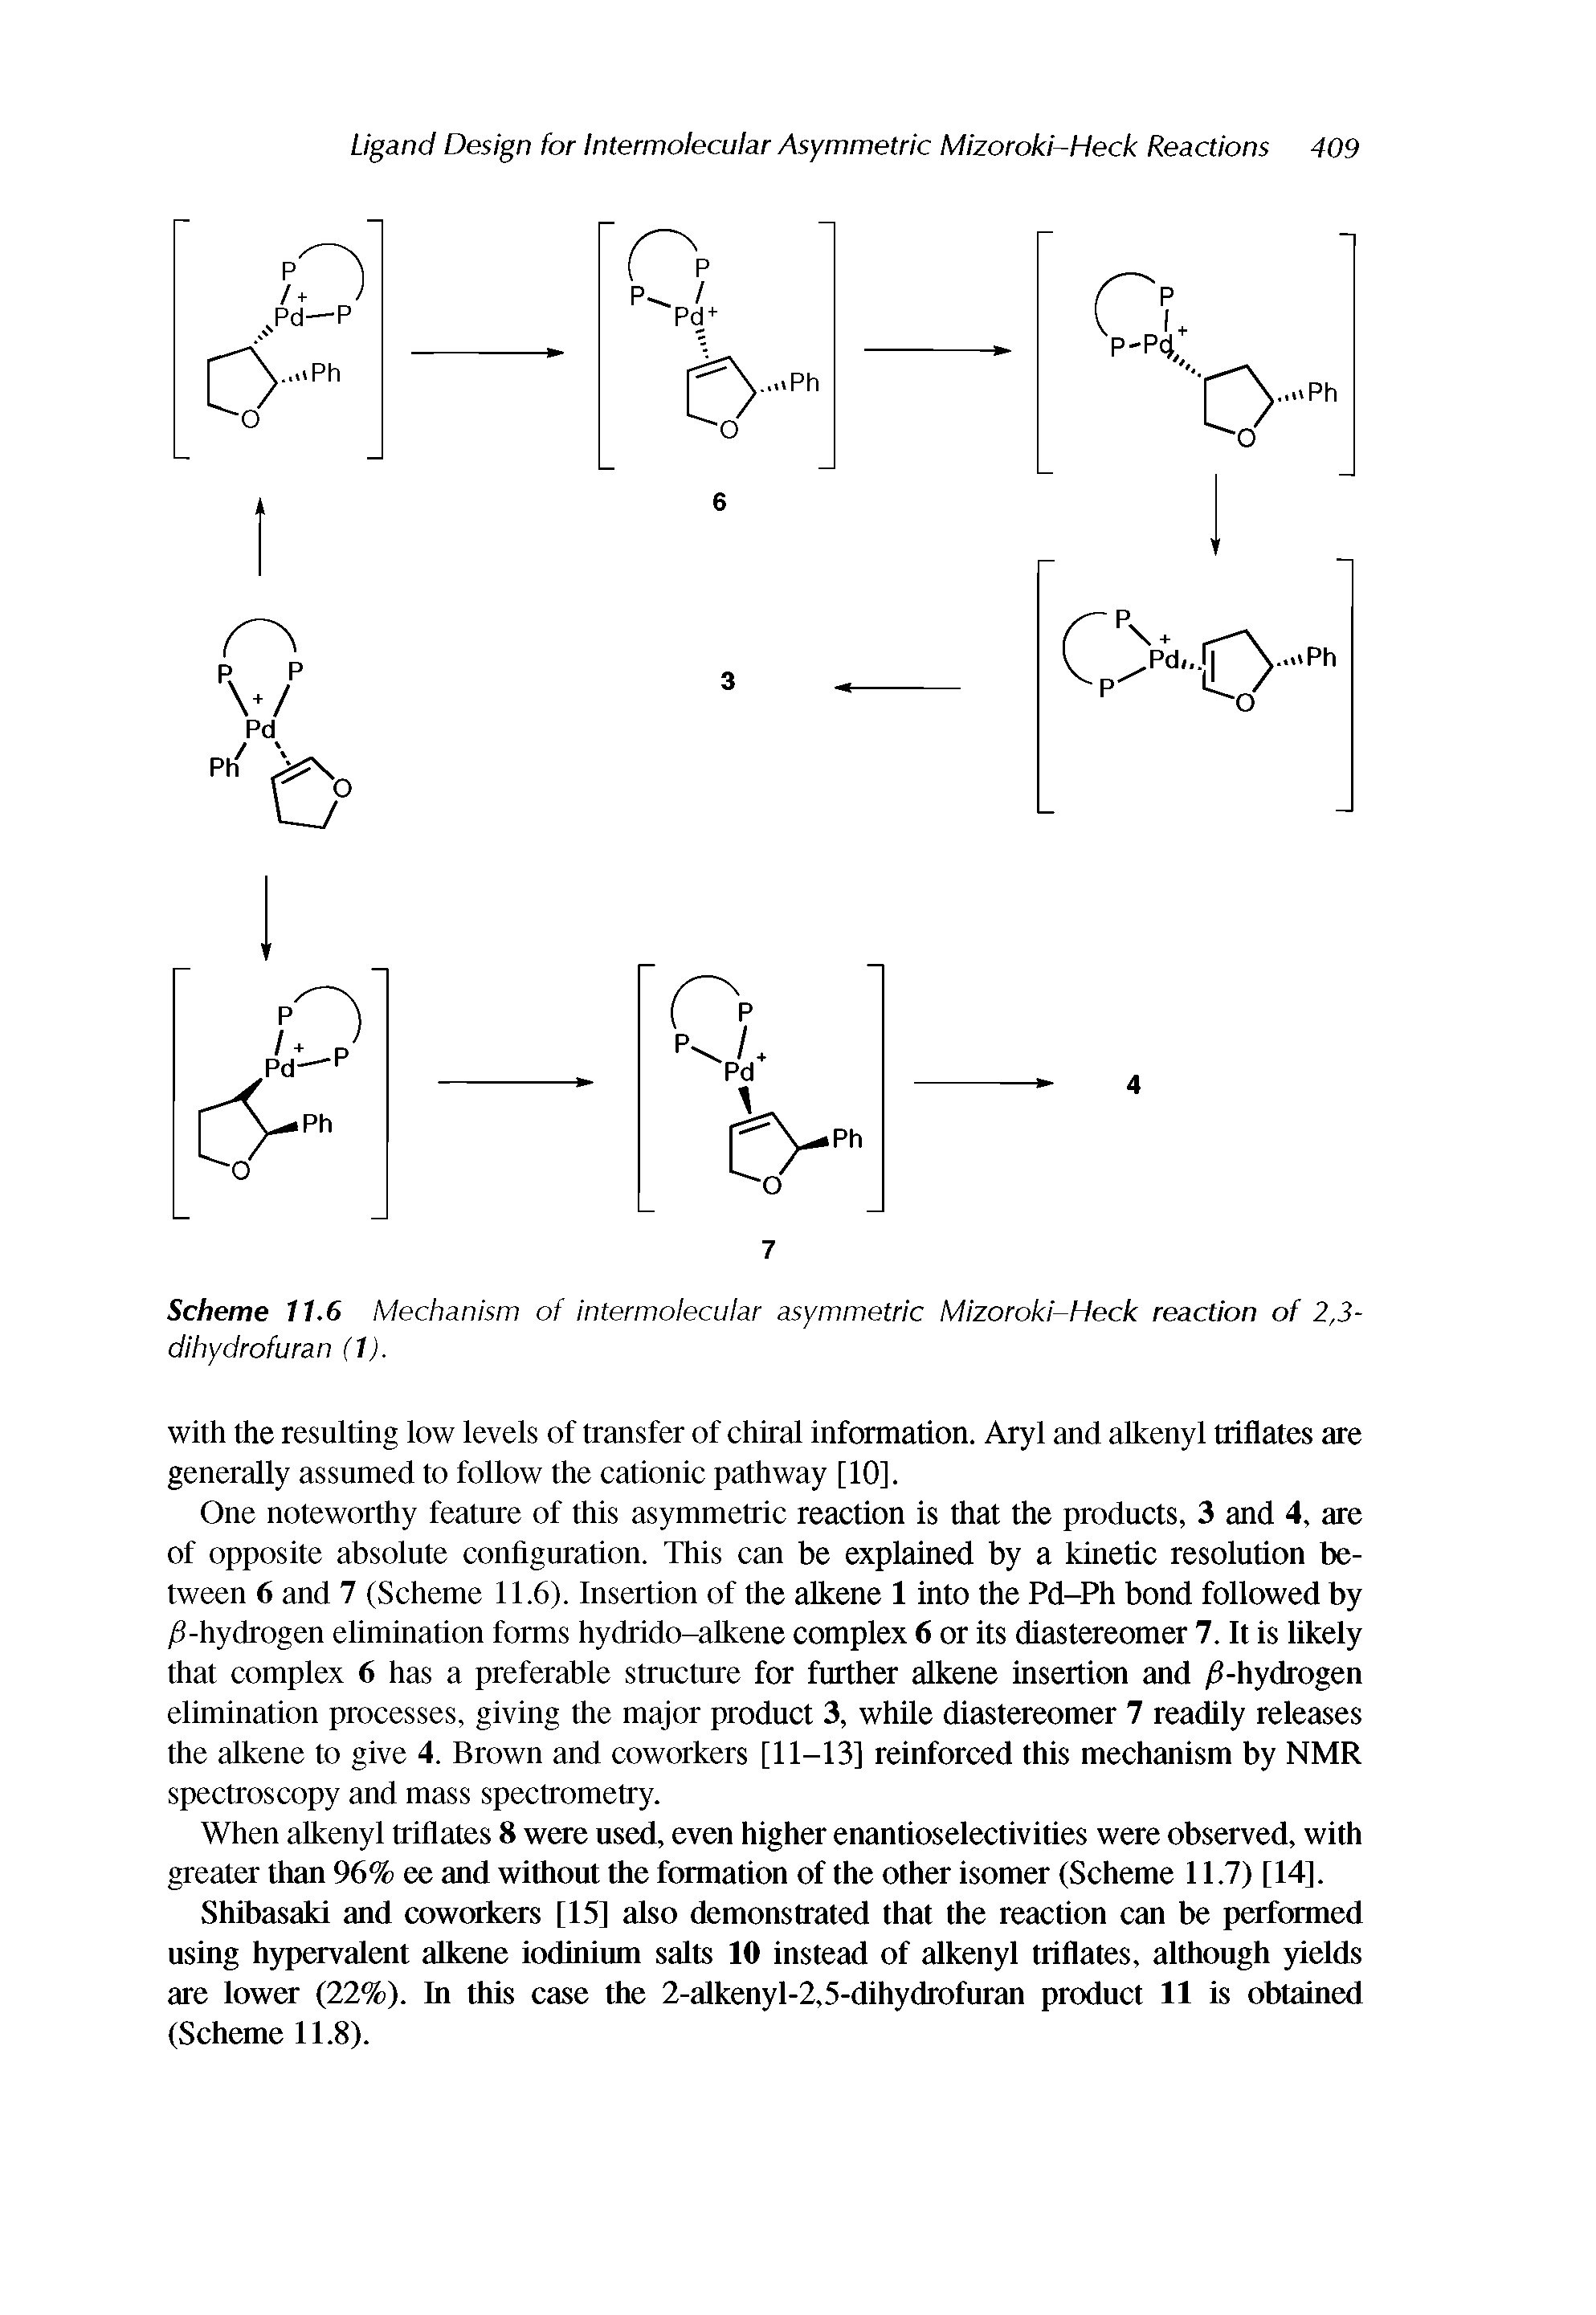 Scheme 11.6 Mechanism of intermolecular asymmetric Mizoroki-Heck reaction of 2,3-dihydrofuran (1).